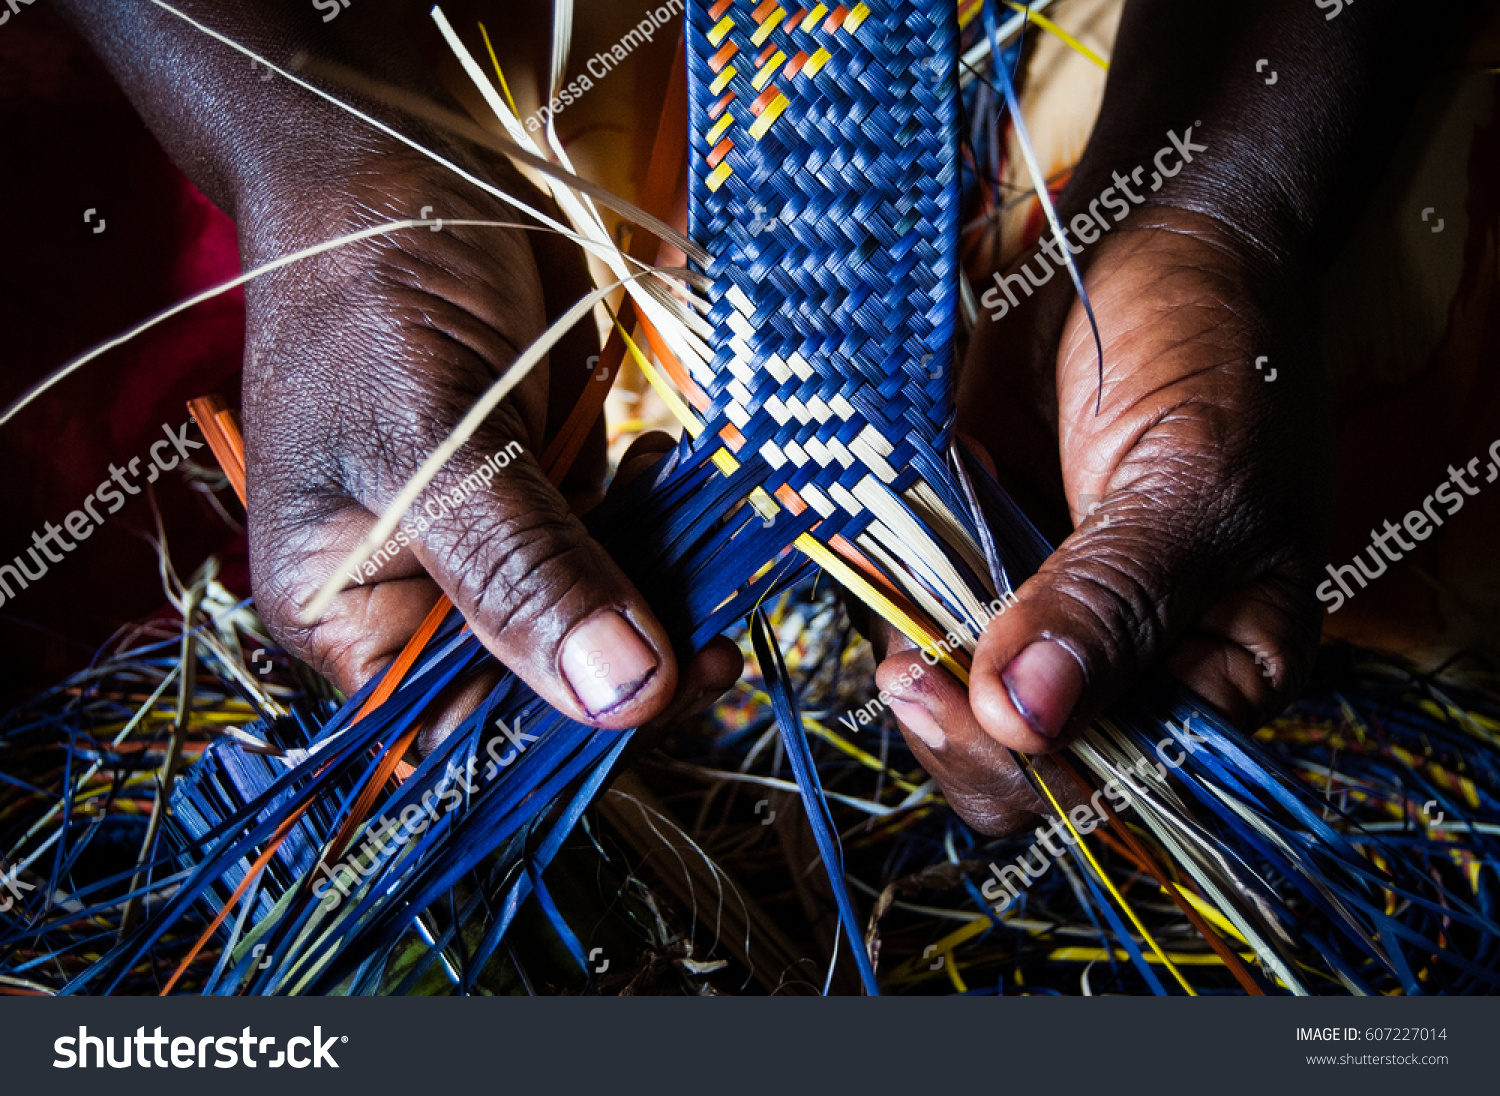  Detail of African woman's hands weaving blue and yellow raffia mat #607227014